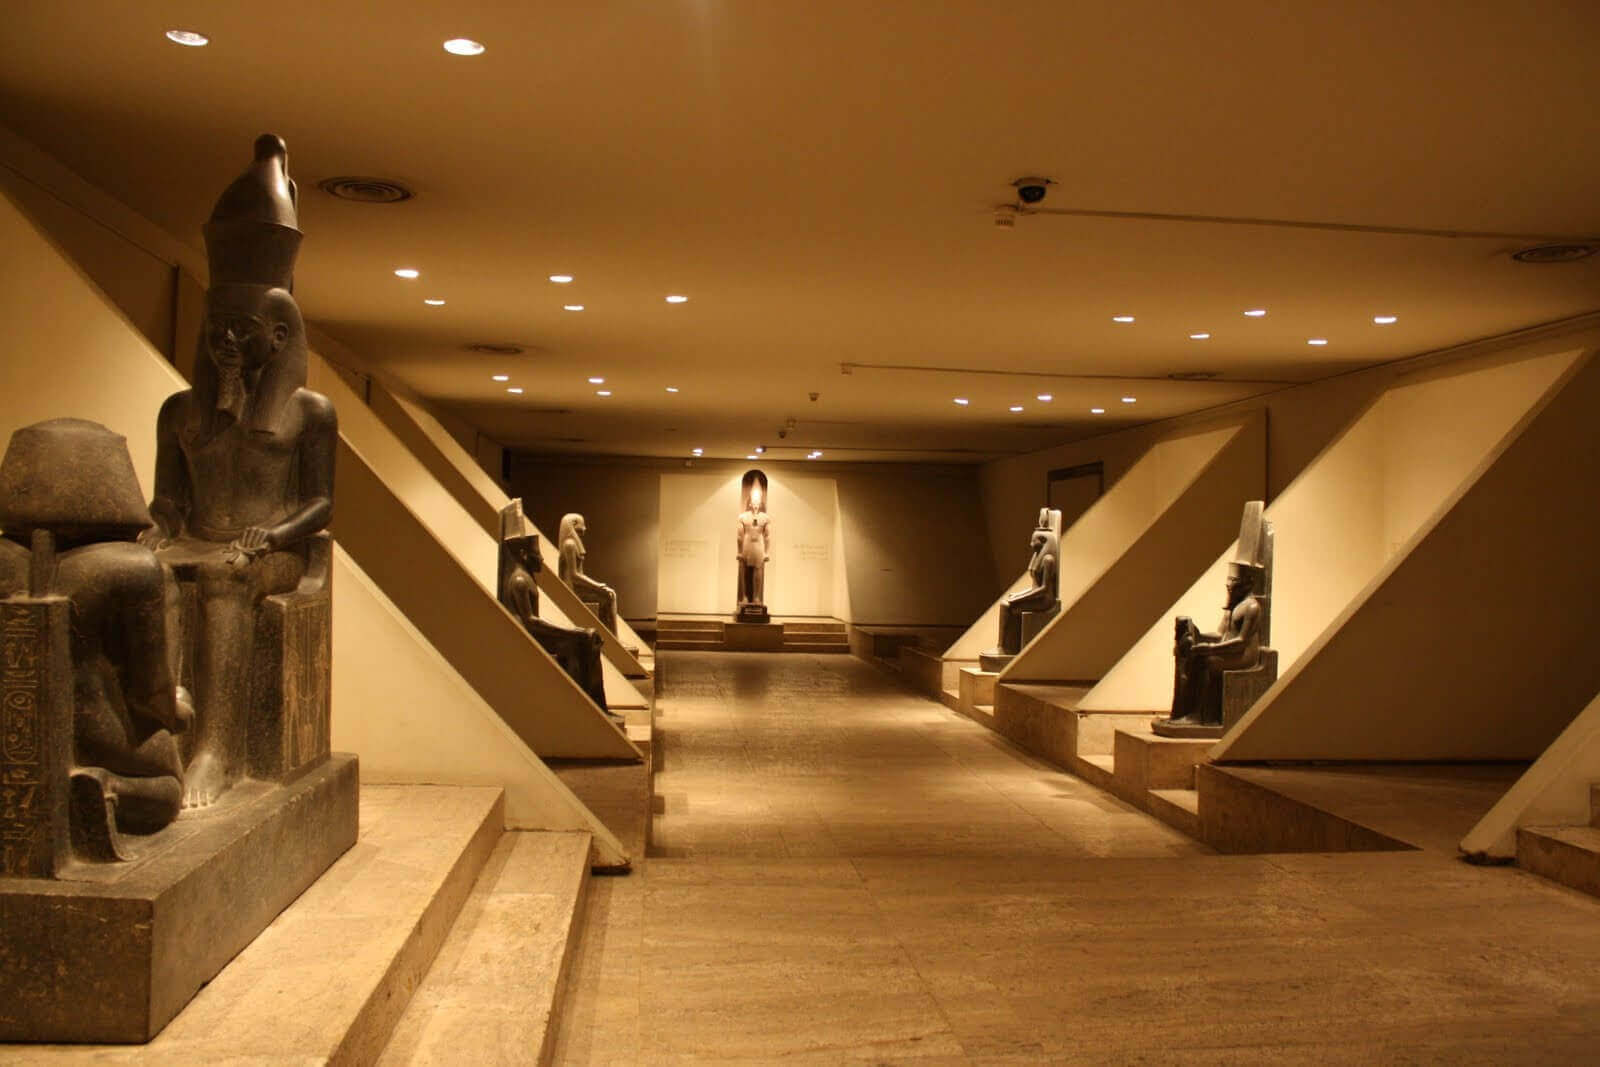 LUXOR MUSEUM OF ANCIENT ART